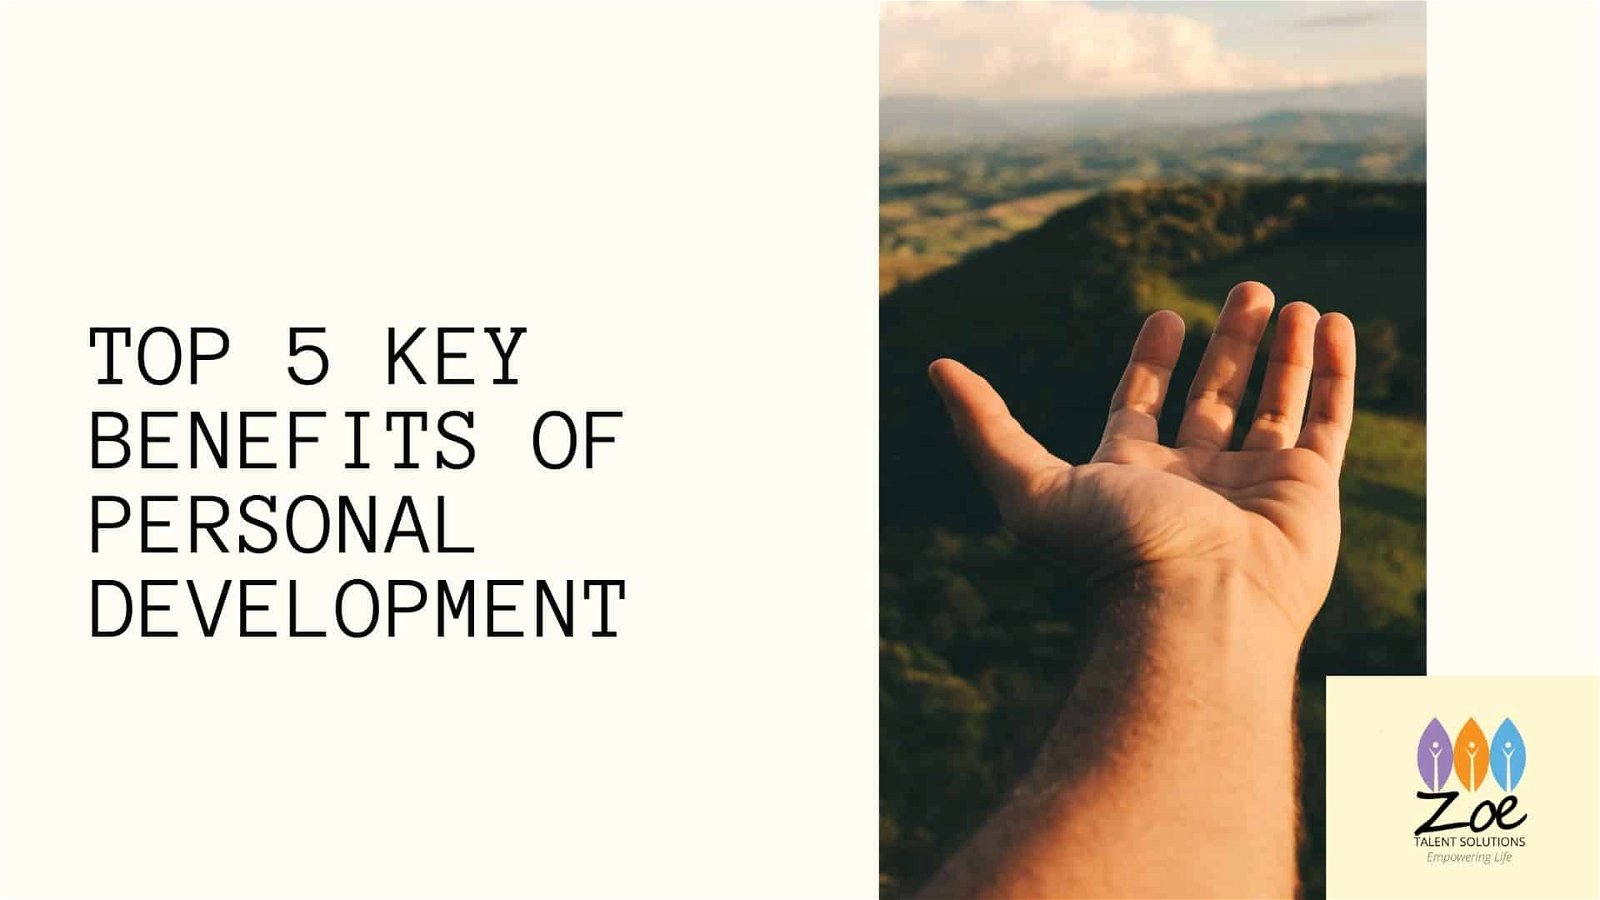 Top 5 Key Benefits of Personal Development